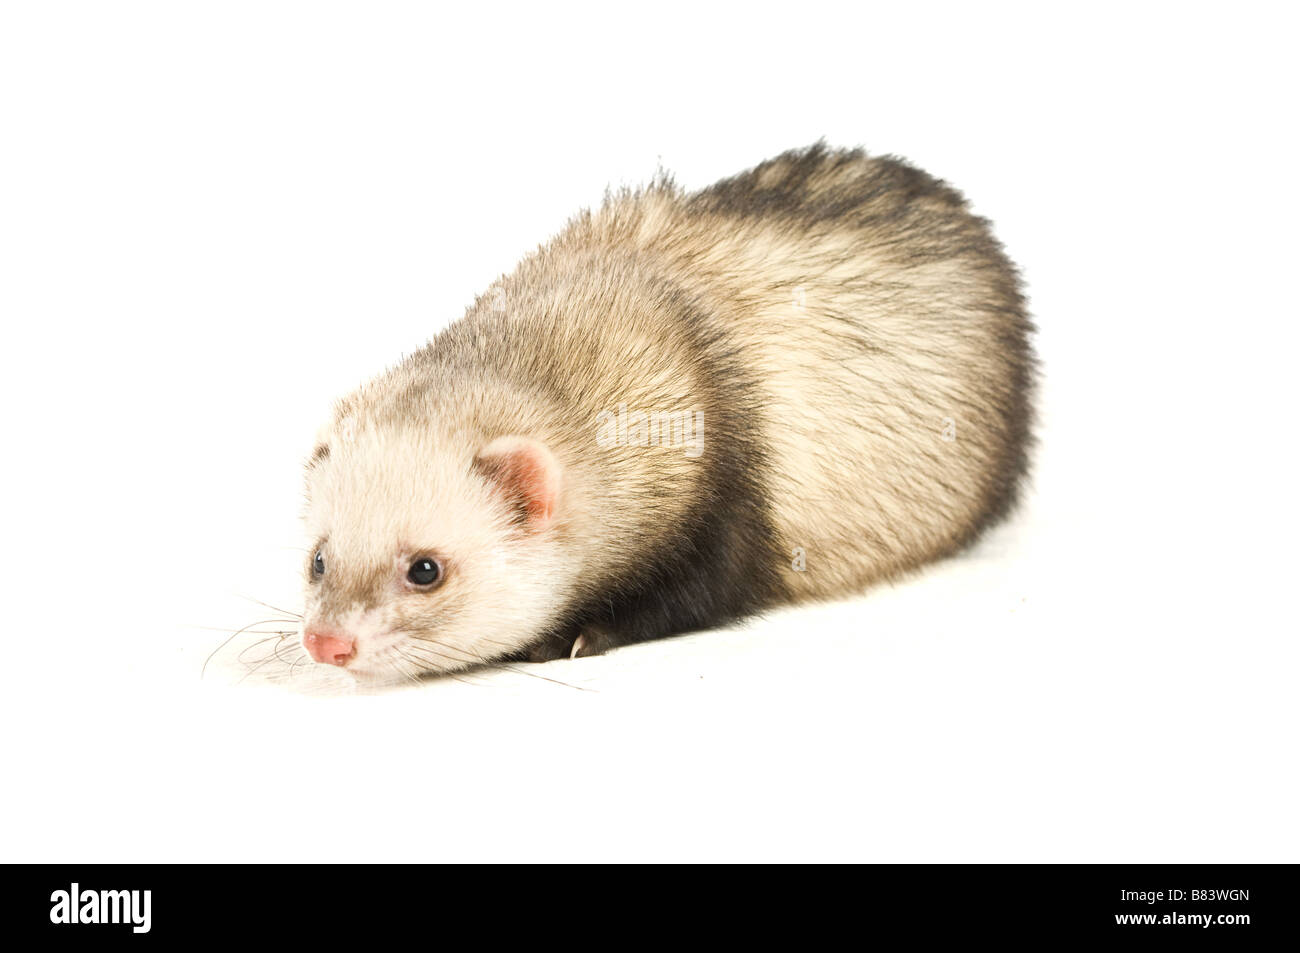 Ferret isolated on a white background Stock Photo